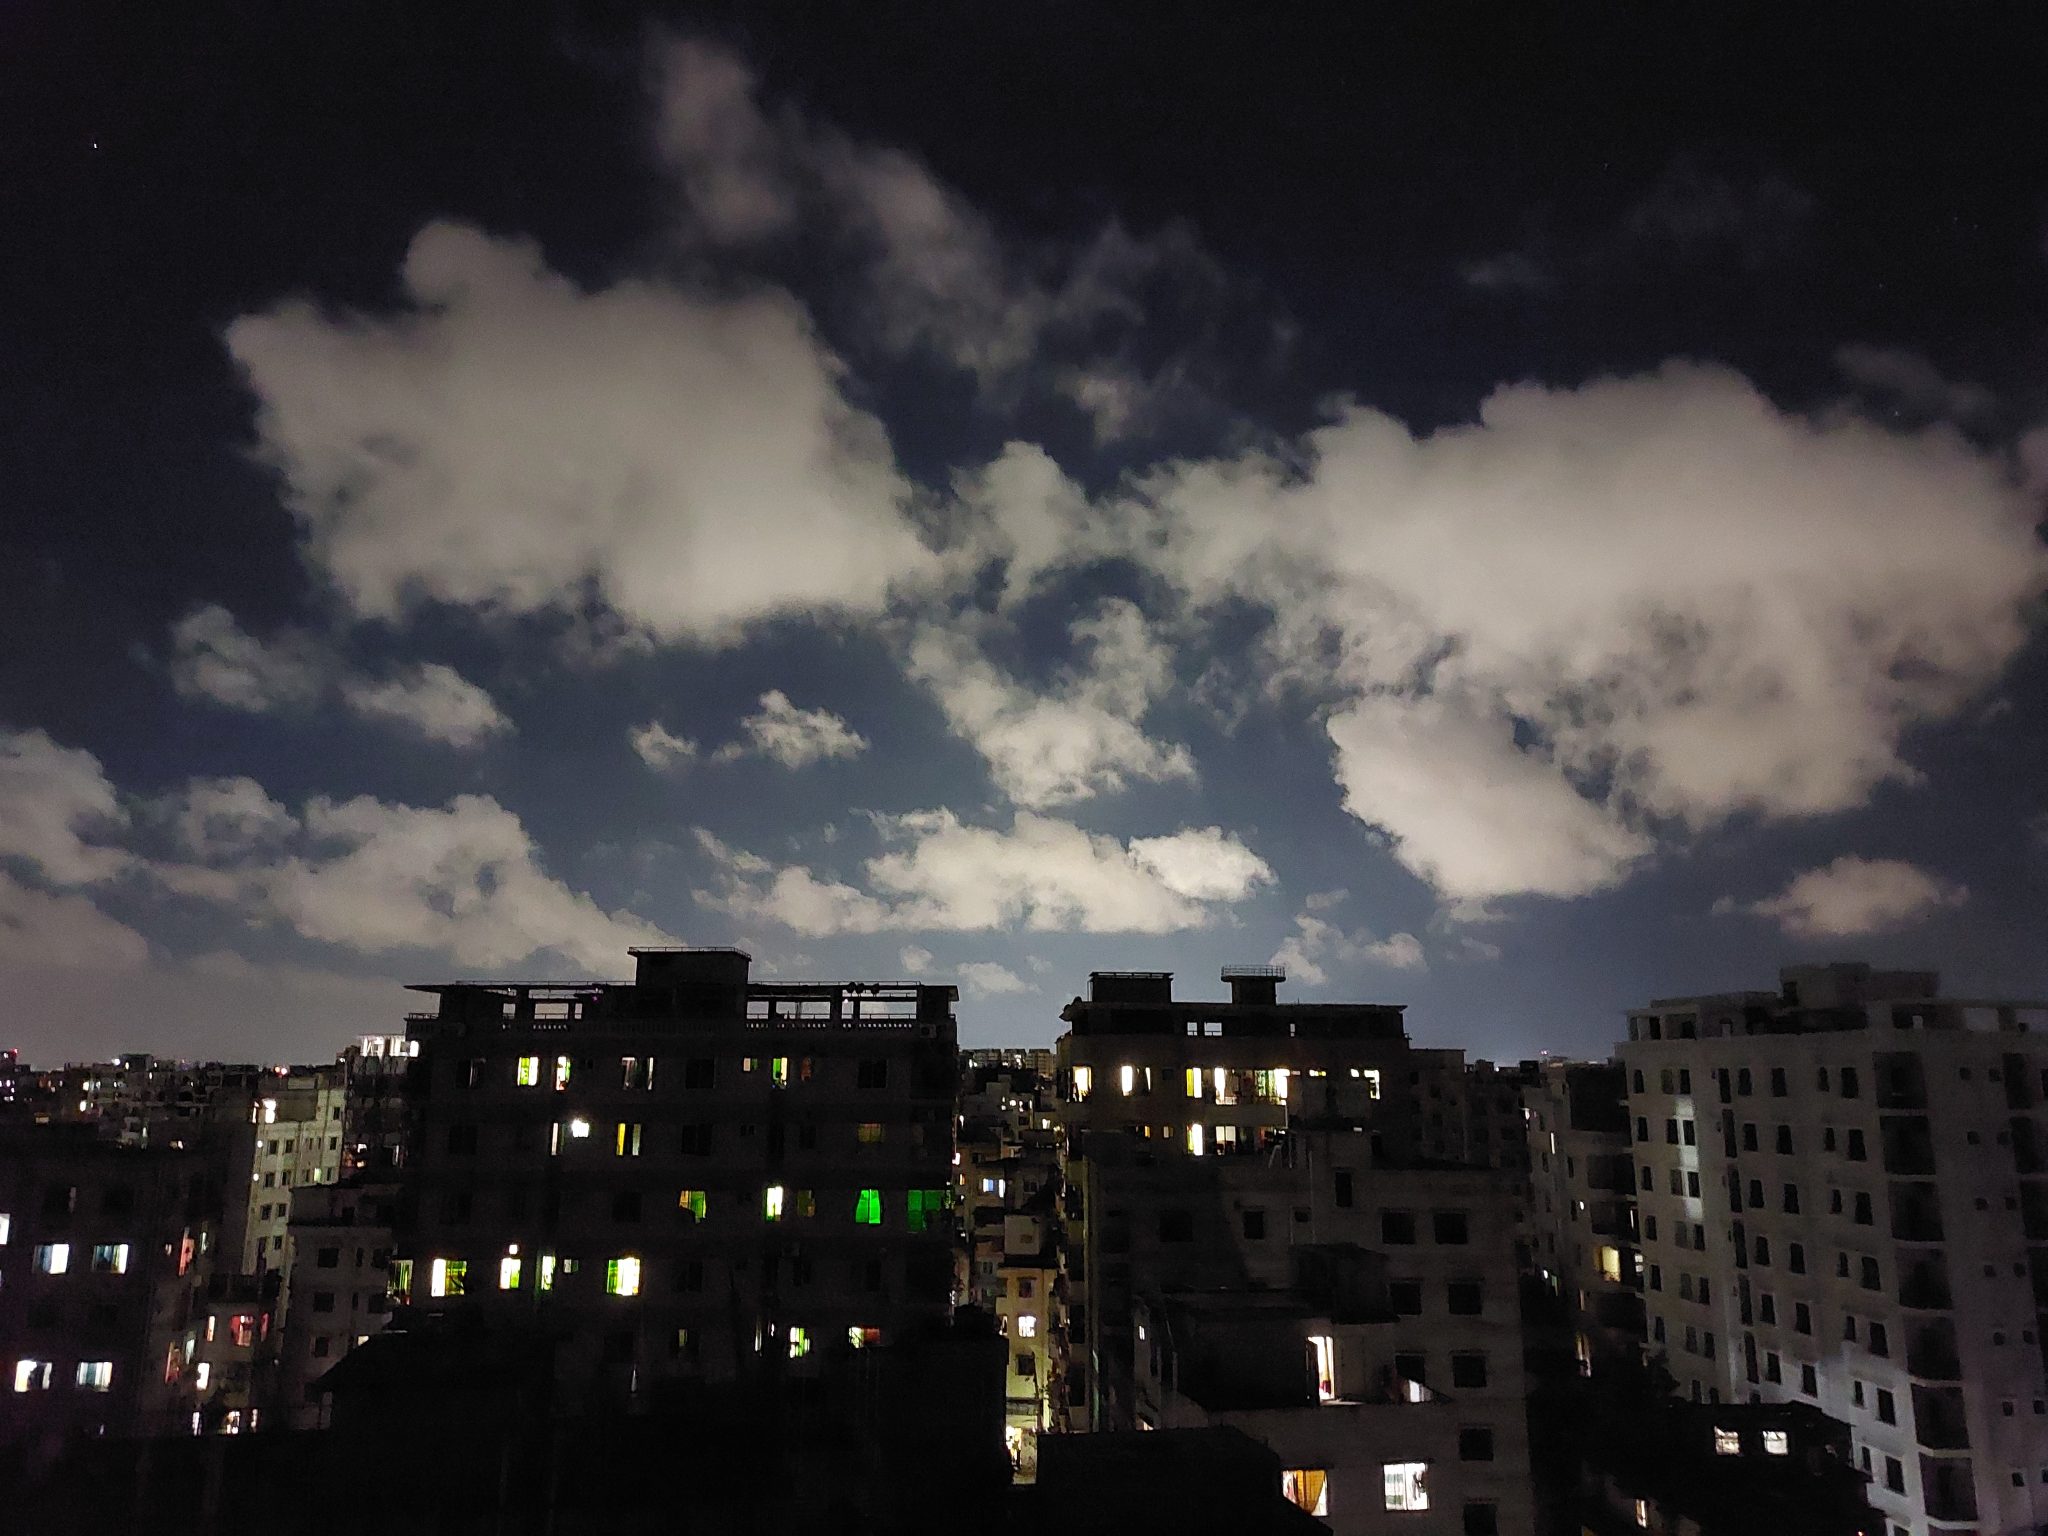 Cloudy Night Where Clouds Seem Like A Cotton Ball !! Location: Dhaka, Bangladesh